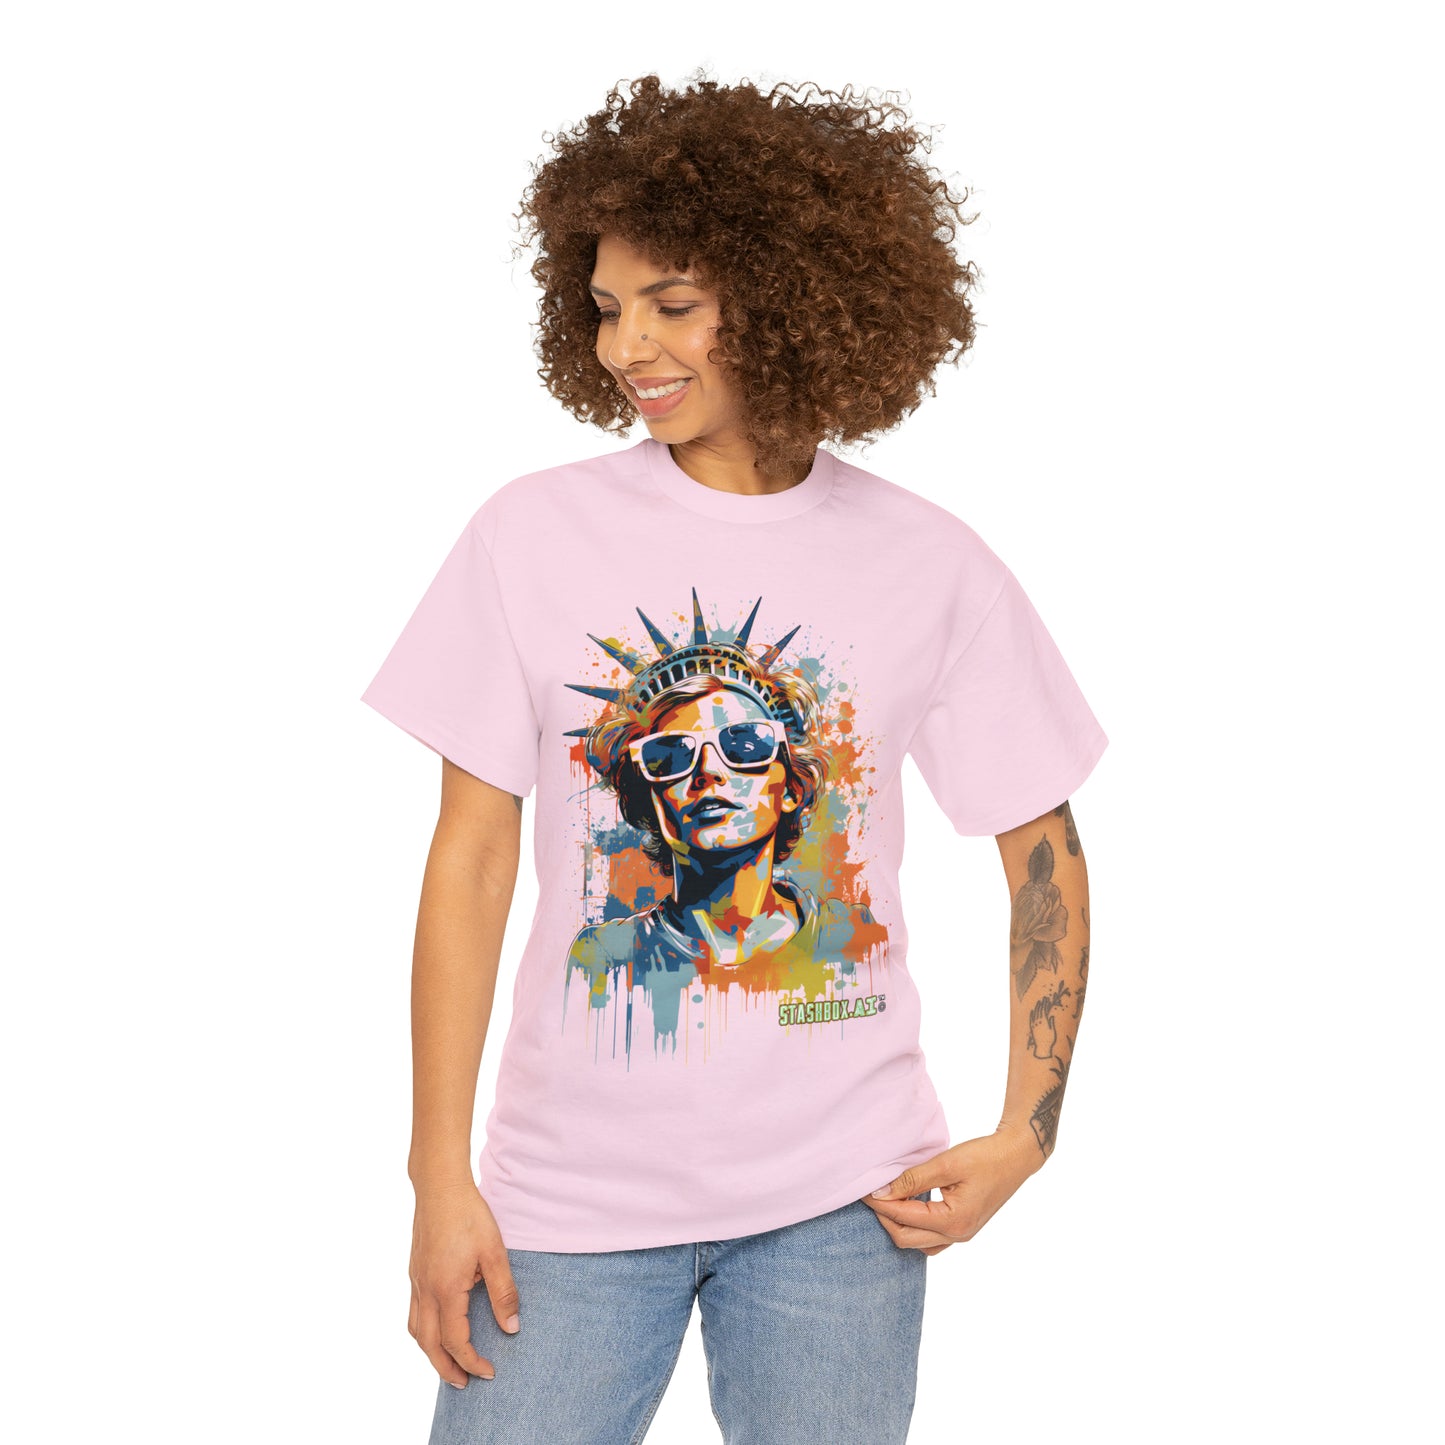 NYC Graffiti Fashion Shirt - Color Splash Urban Apparel - Stashbox Streetwear